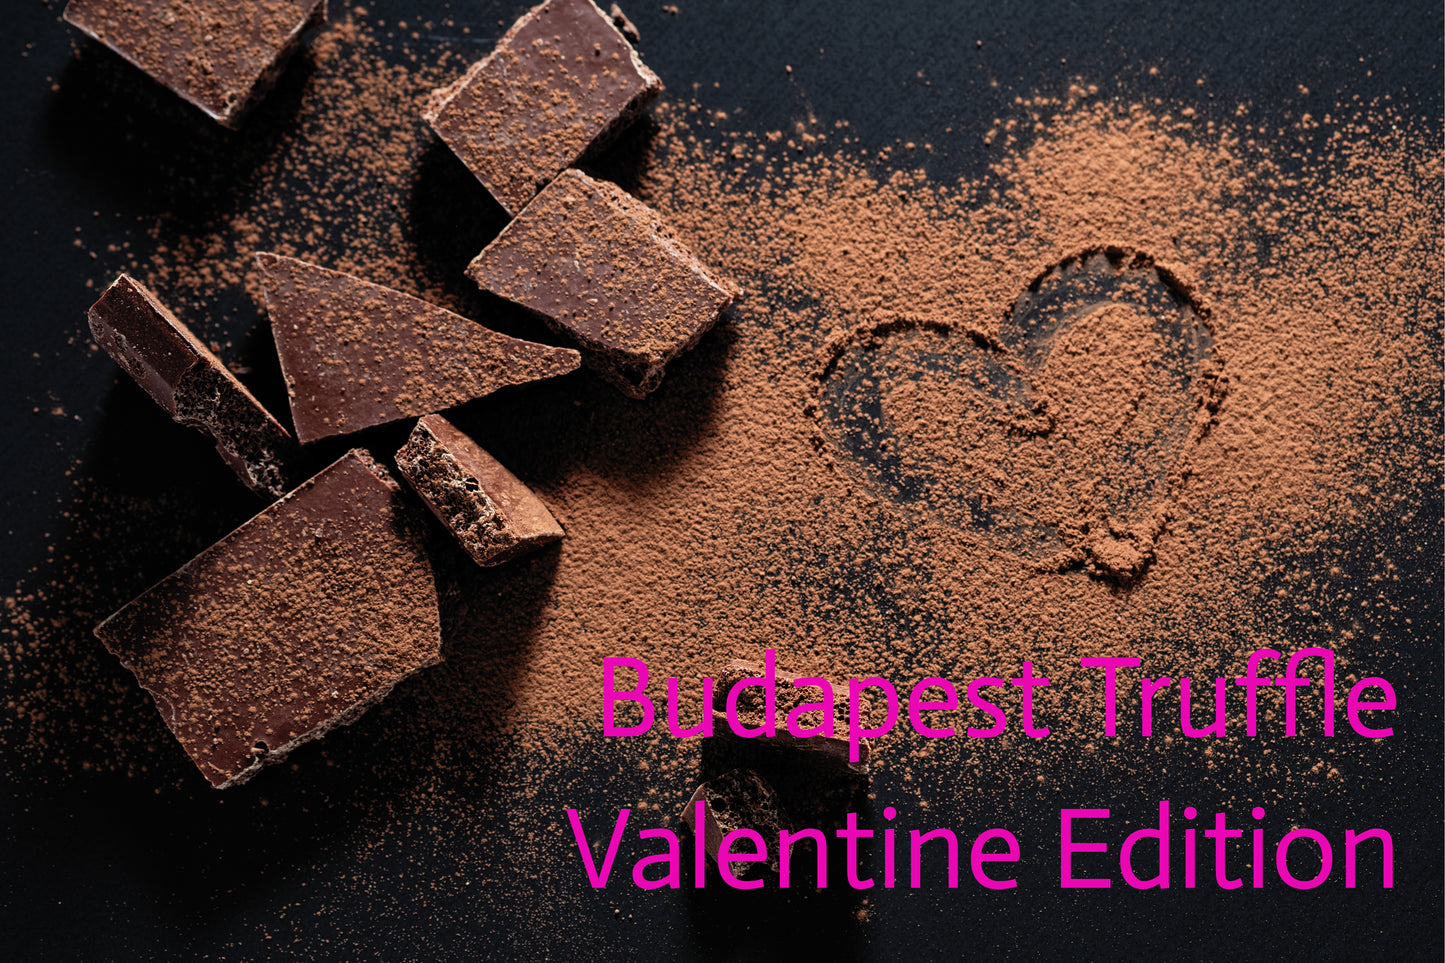 Valentine Edition, Budapest Truffles